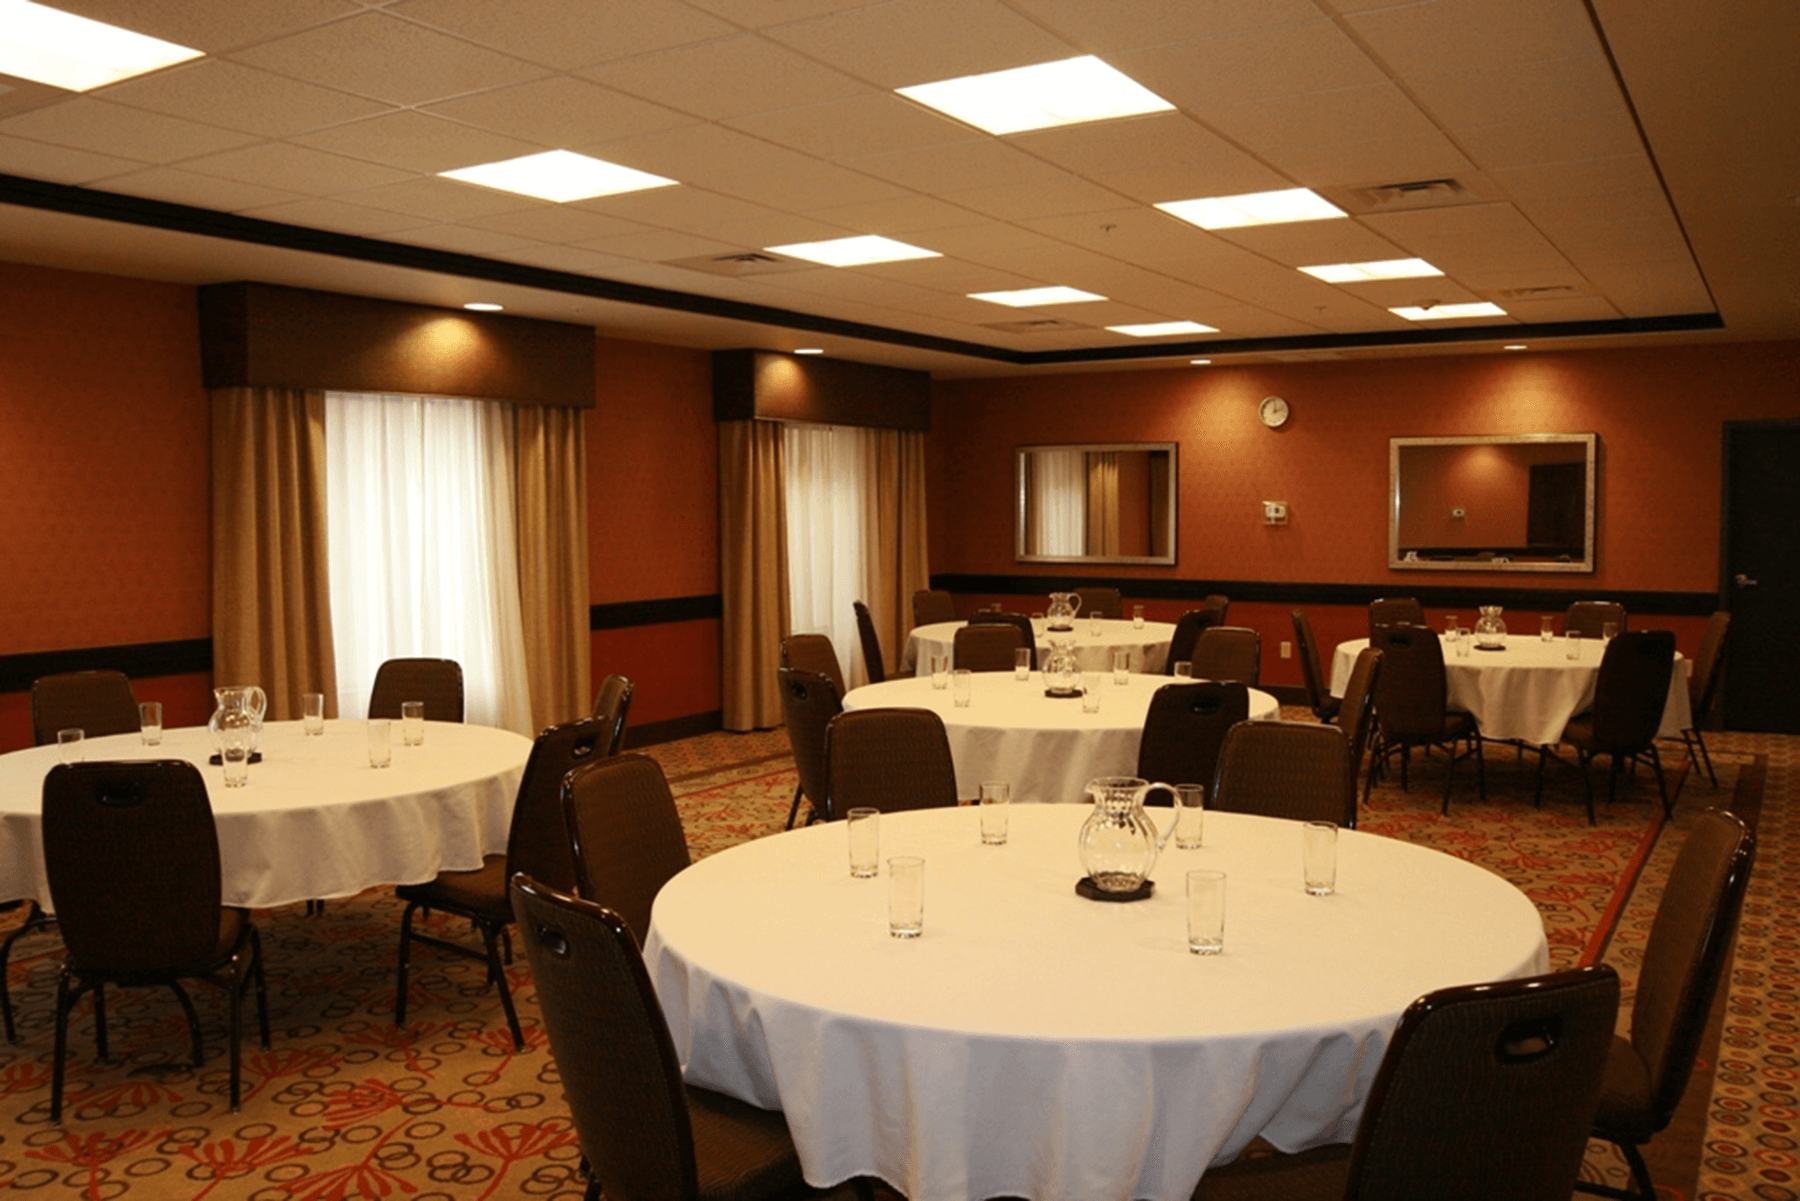  Hampton Inn and Suites Spokane meeting room interior 